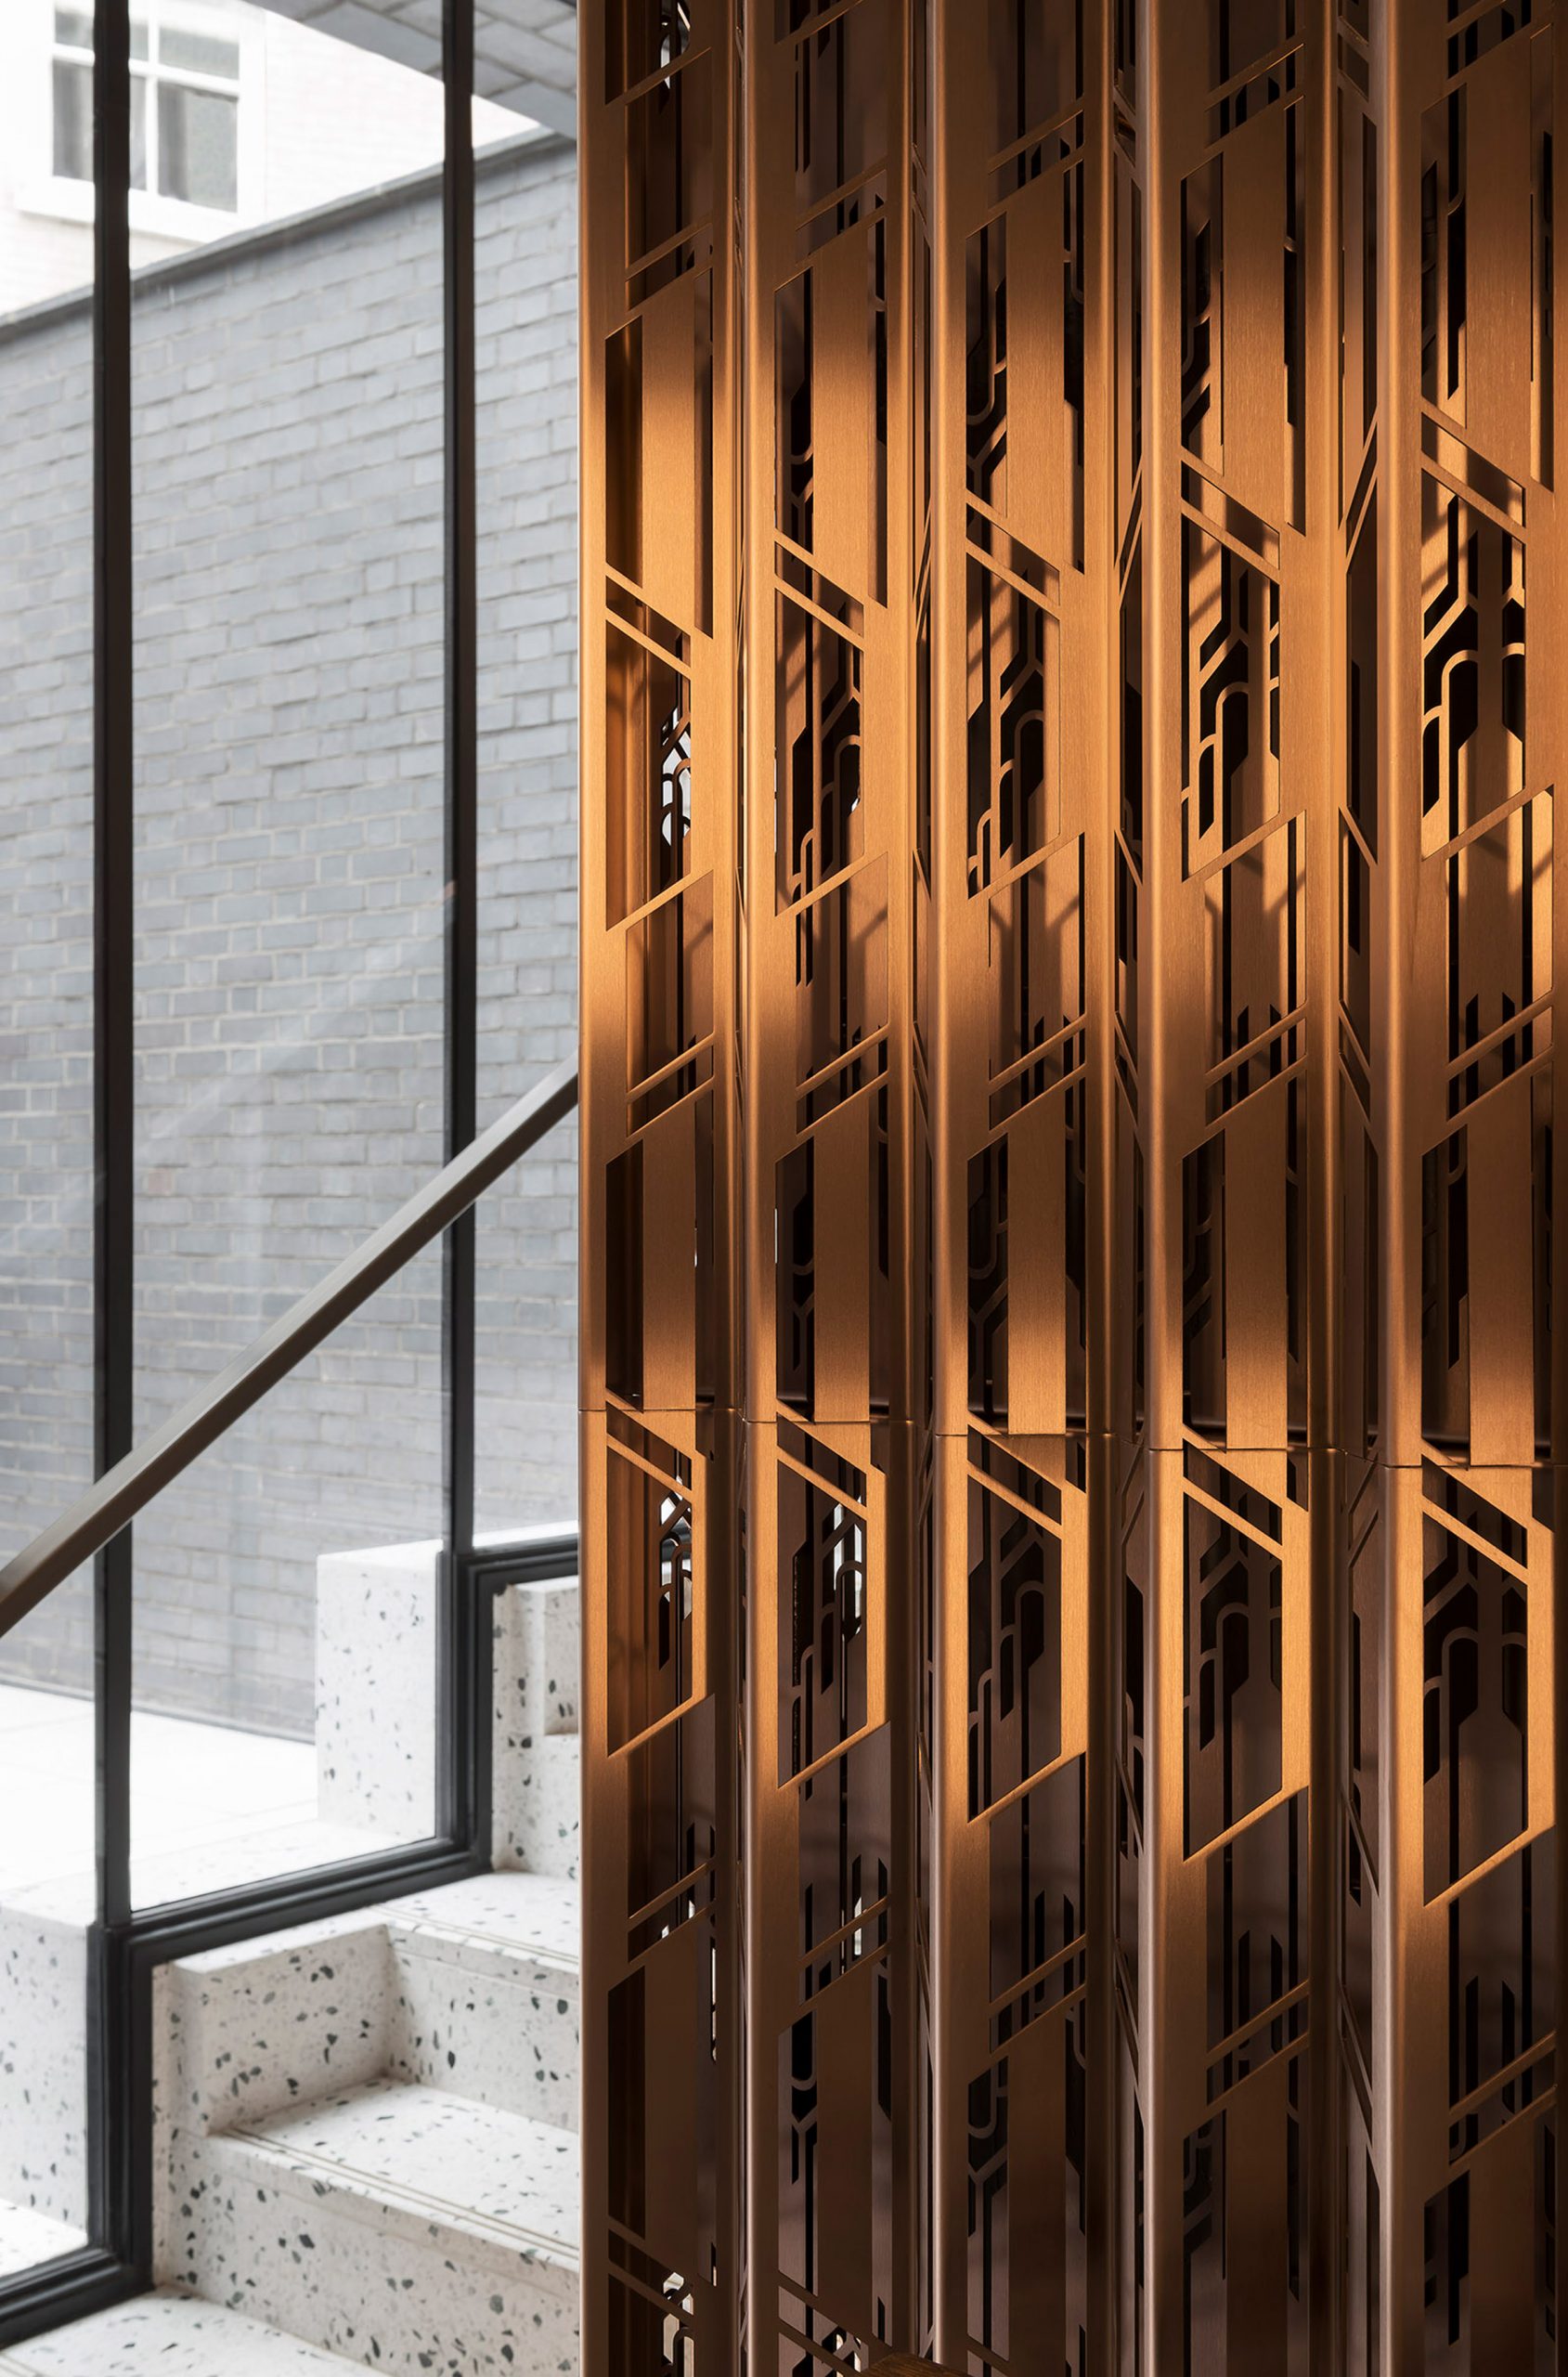 Bureau de Change inserts bronze lift into The Gaslight building in London